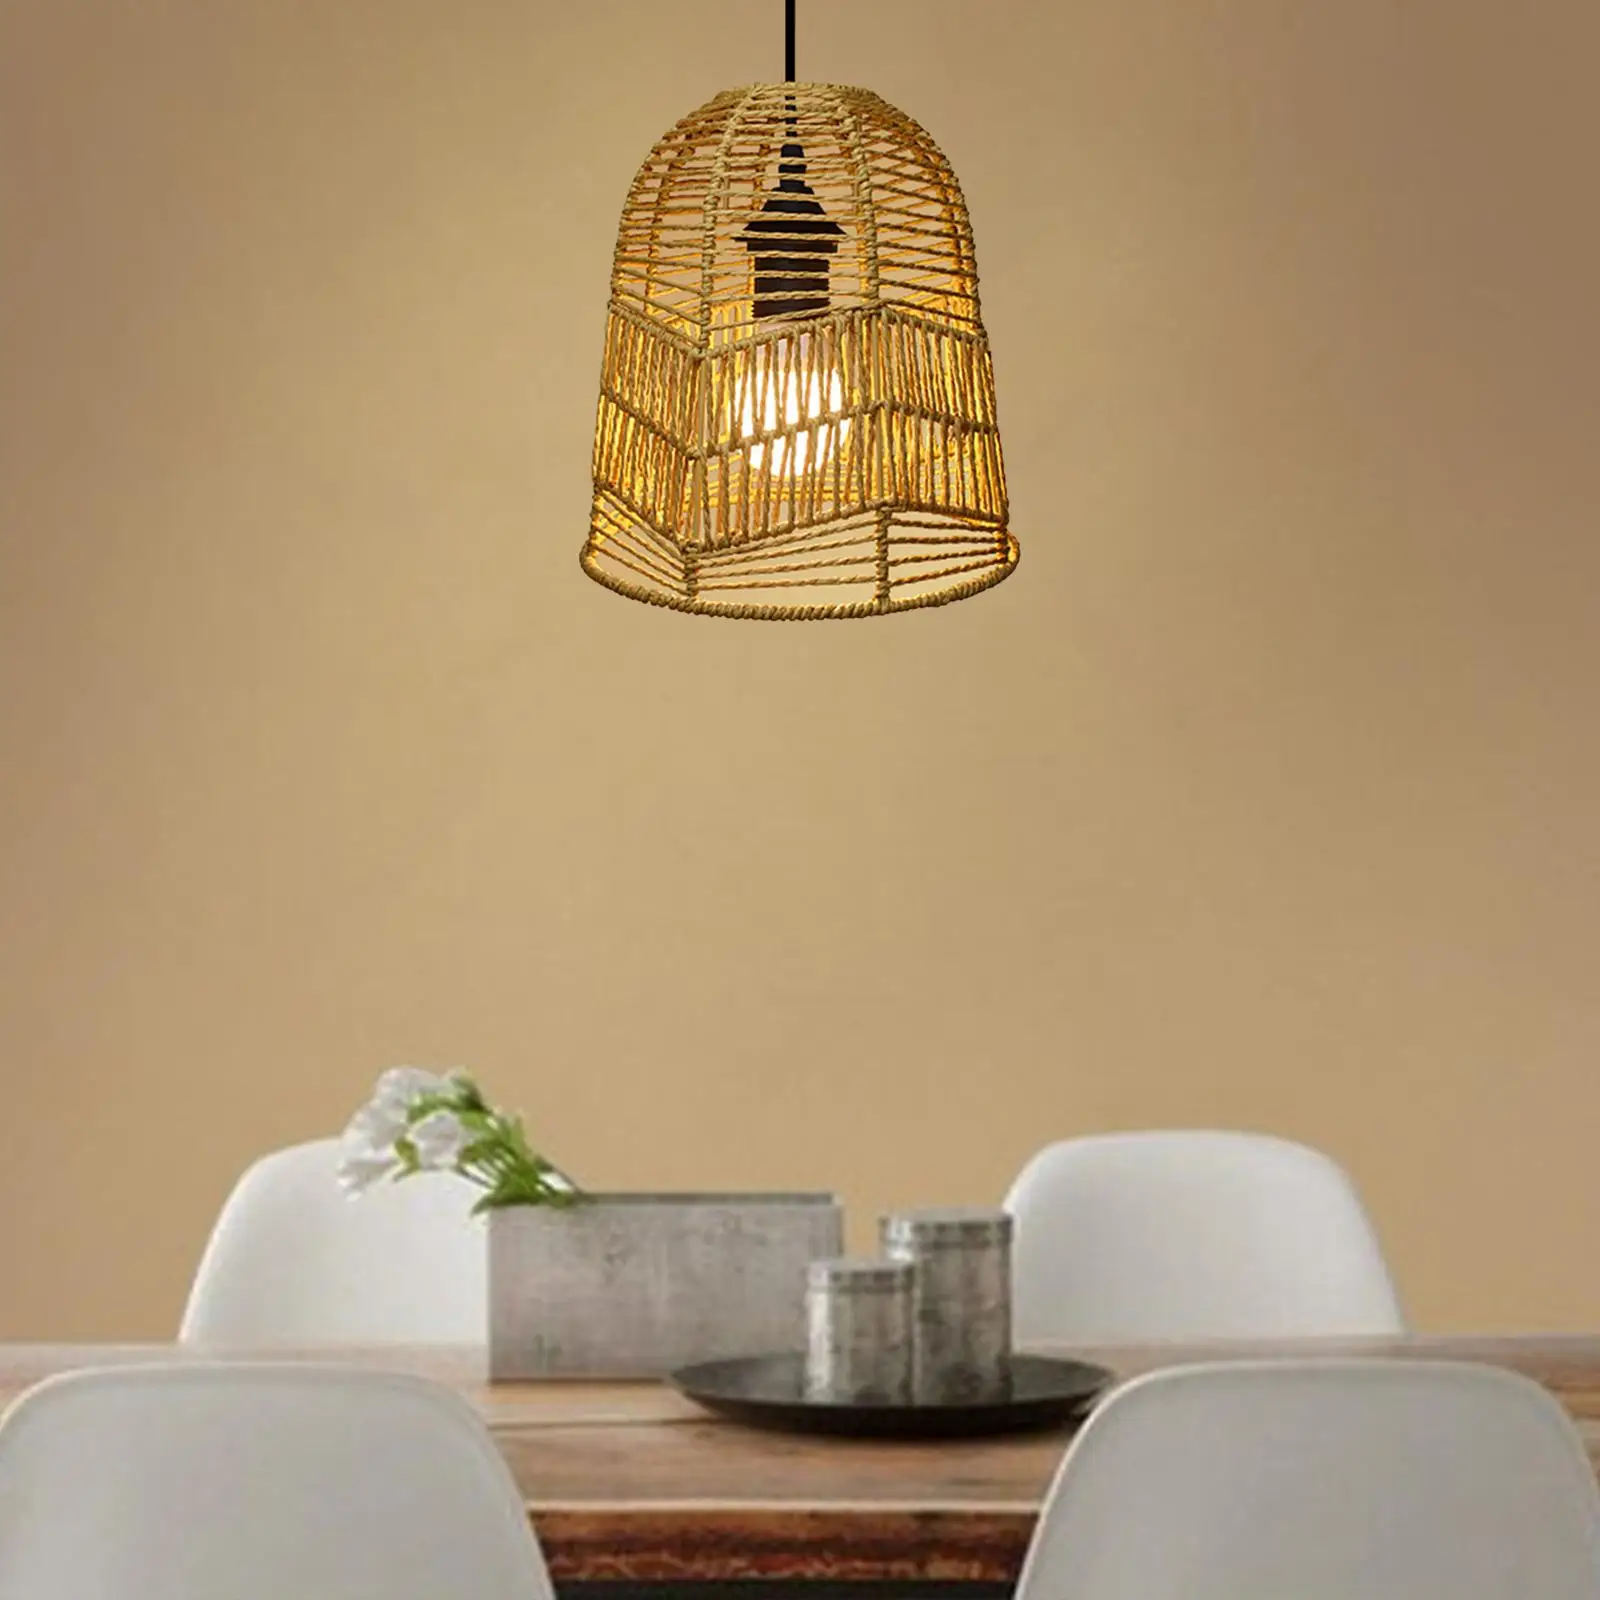 Woven Pendant Lamp Shade Ceiling Pendant Light Shade Chandelier Lamp Shade Light Bulb Cage Guard for Restaurant Teahouse Bar